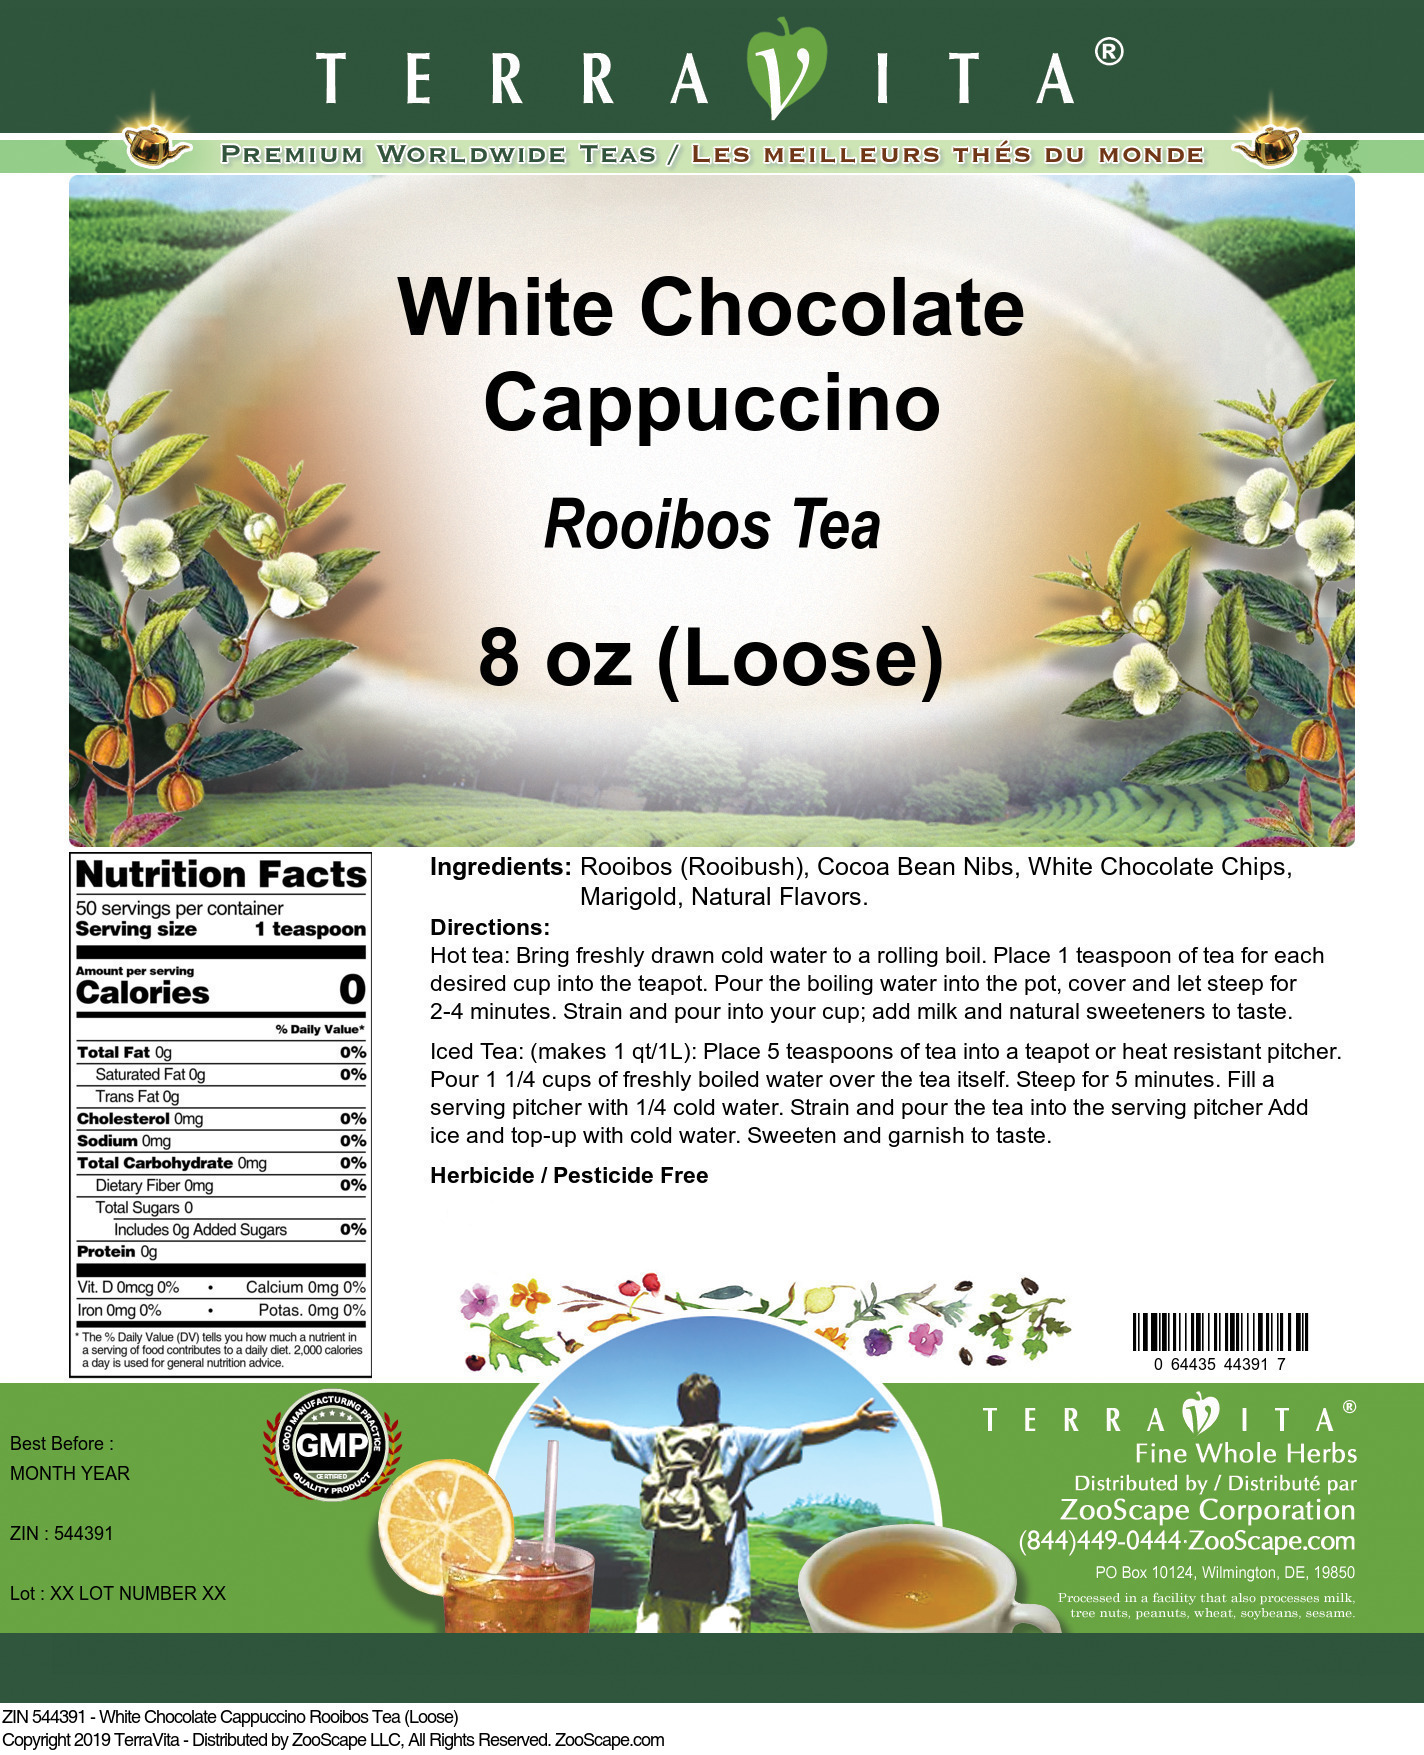 White Chocolate Cappuccino Rooibos Tea (Loose) - Label